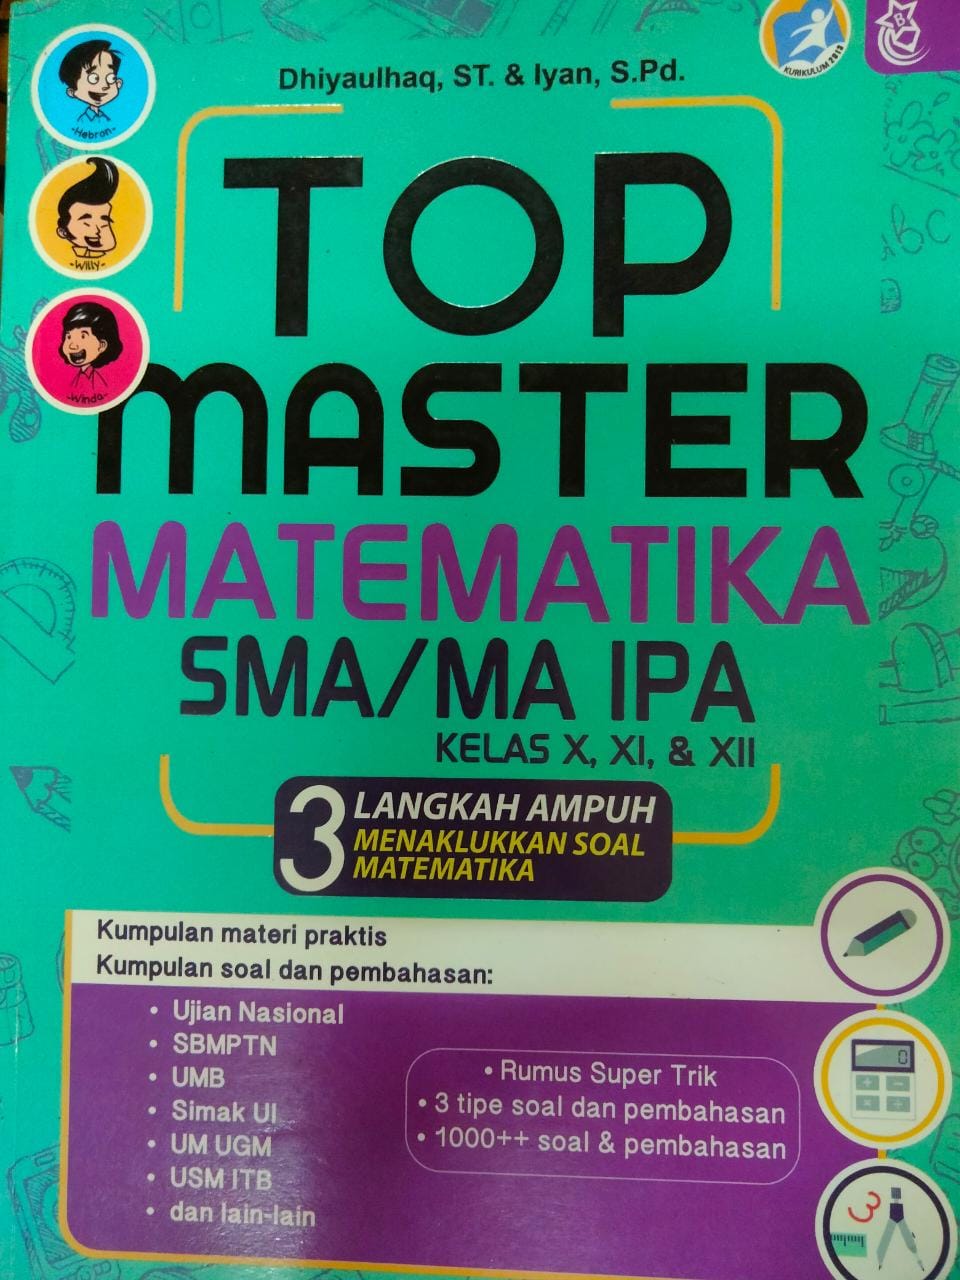 Top master matematika SMA /MA